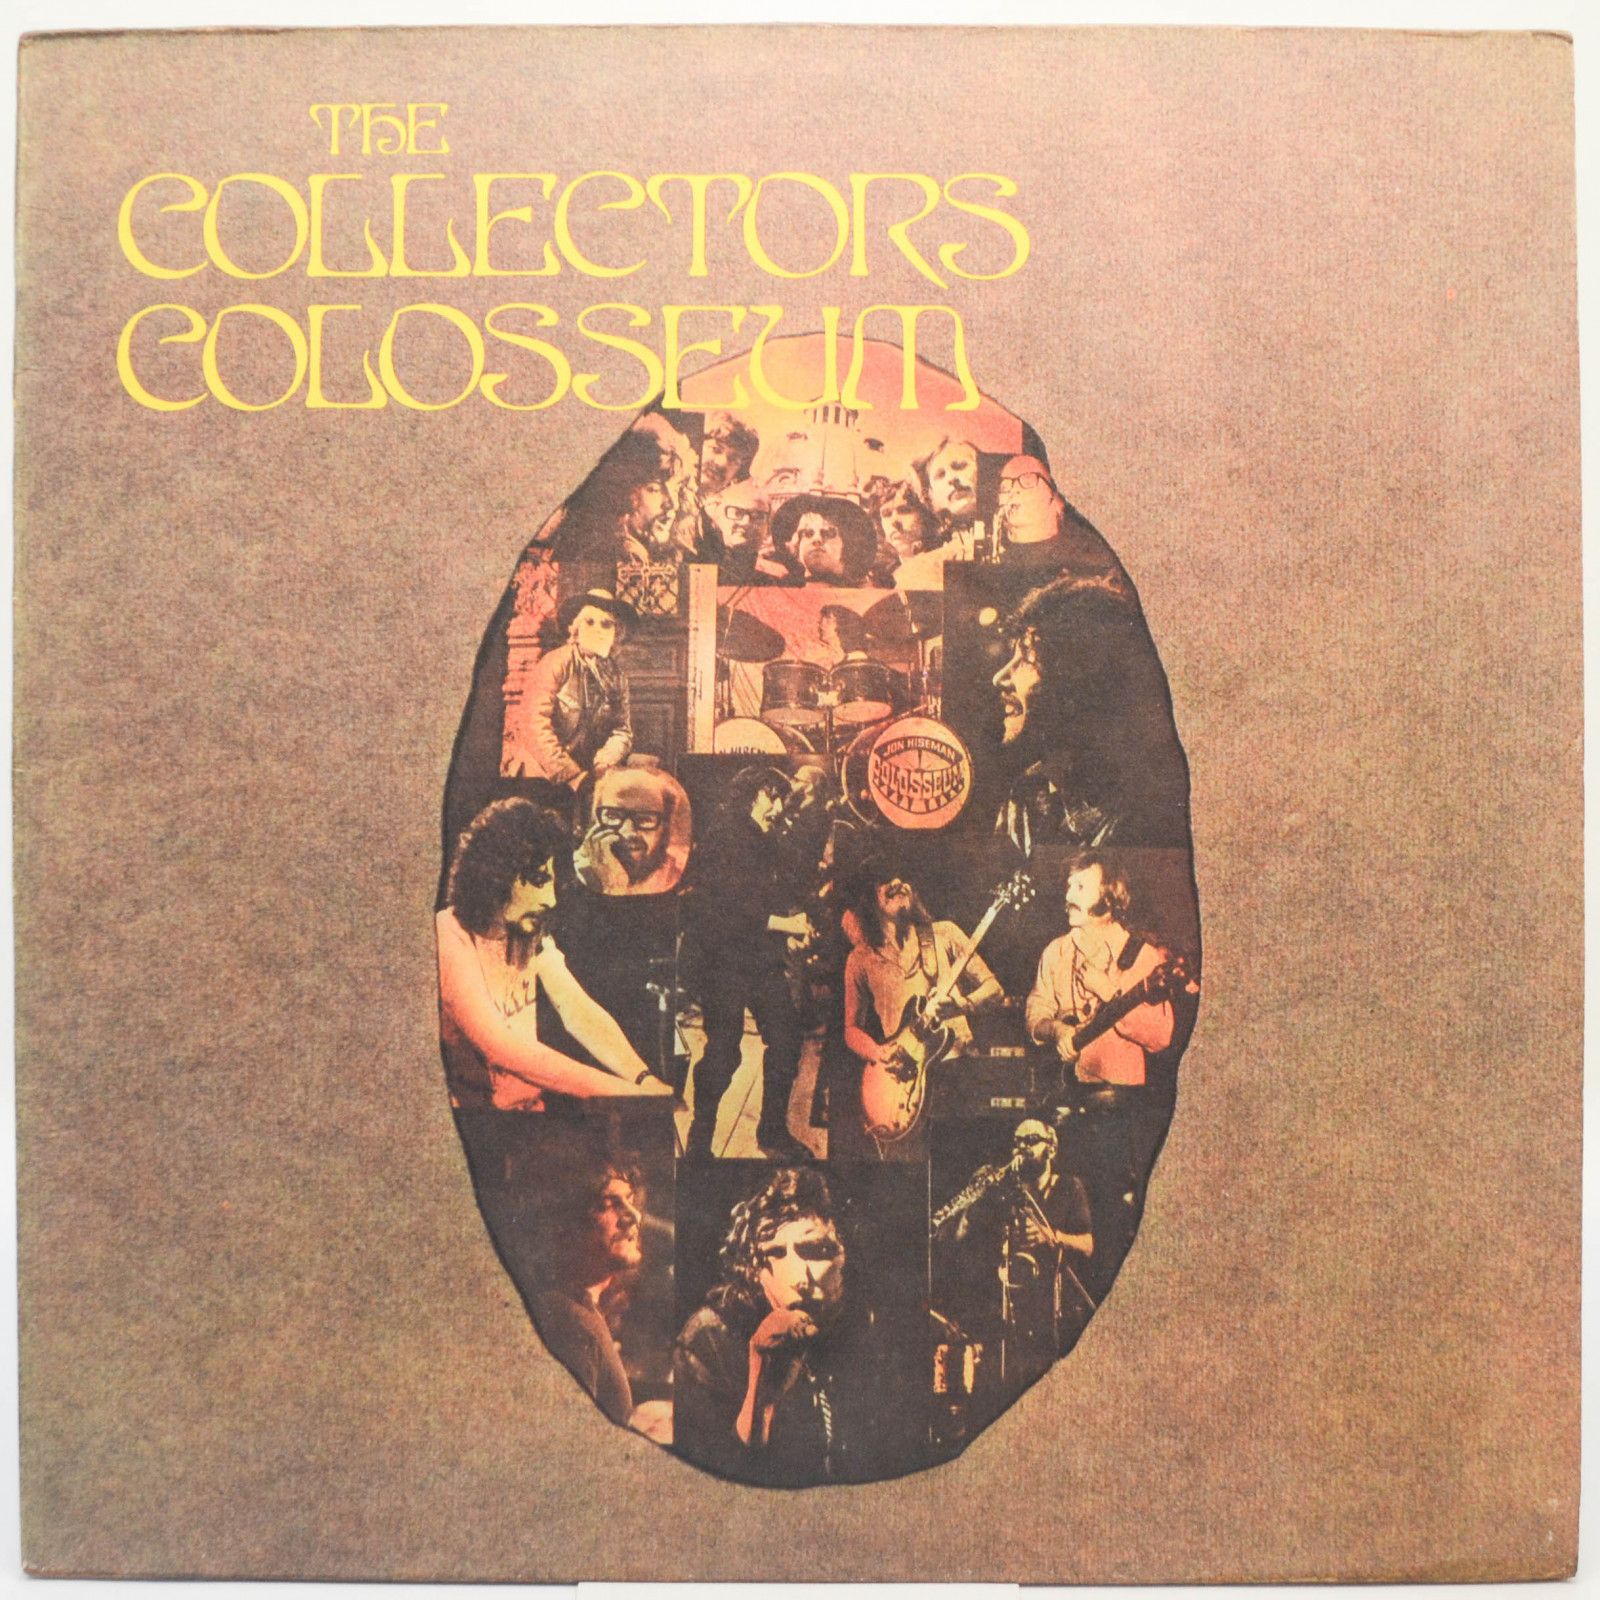 Colosseum — The Collectors Colosseum, 1971